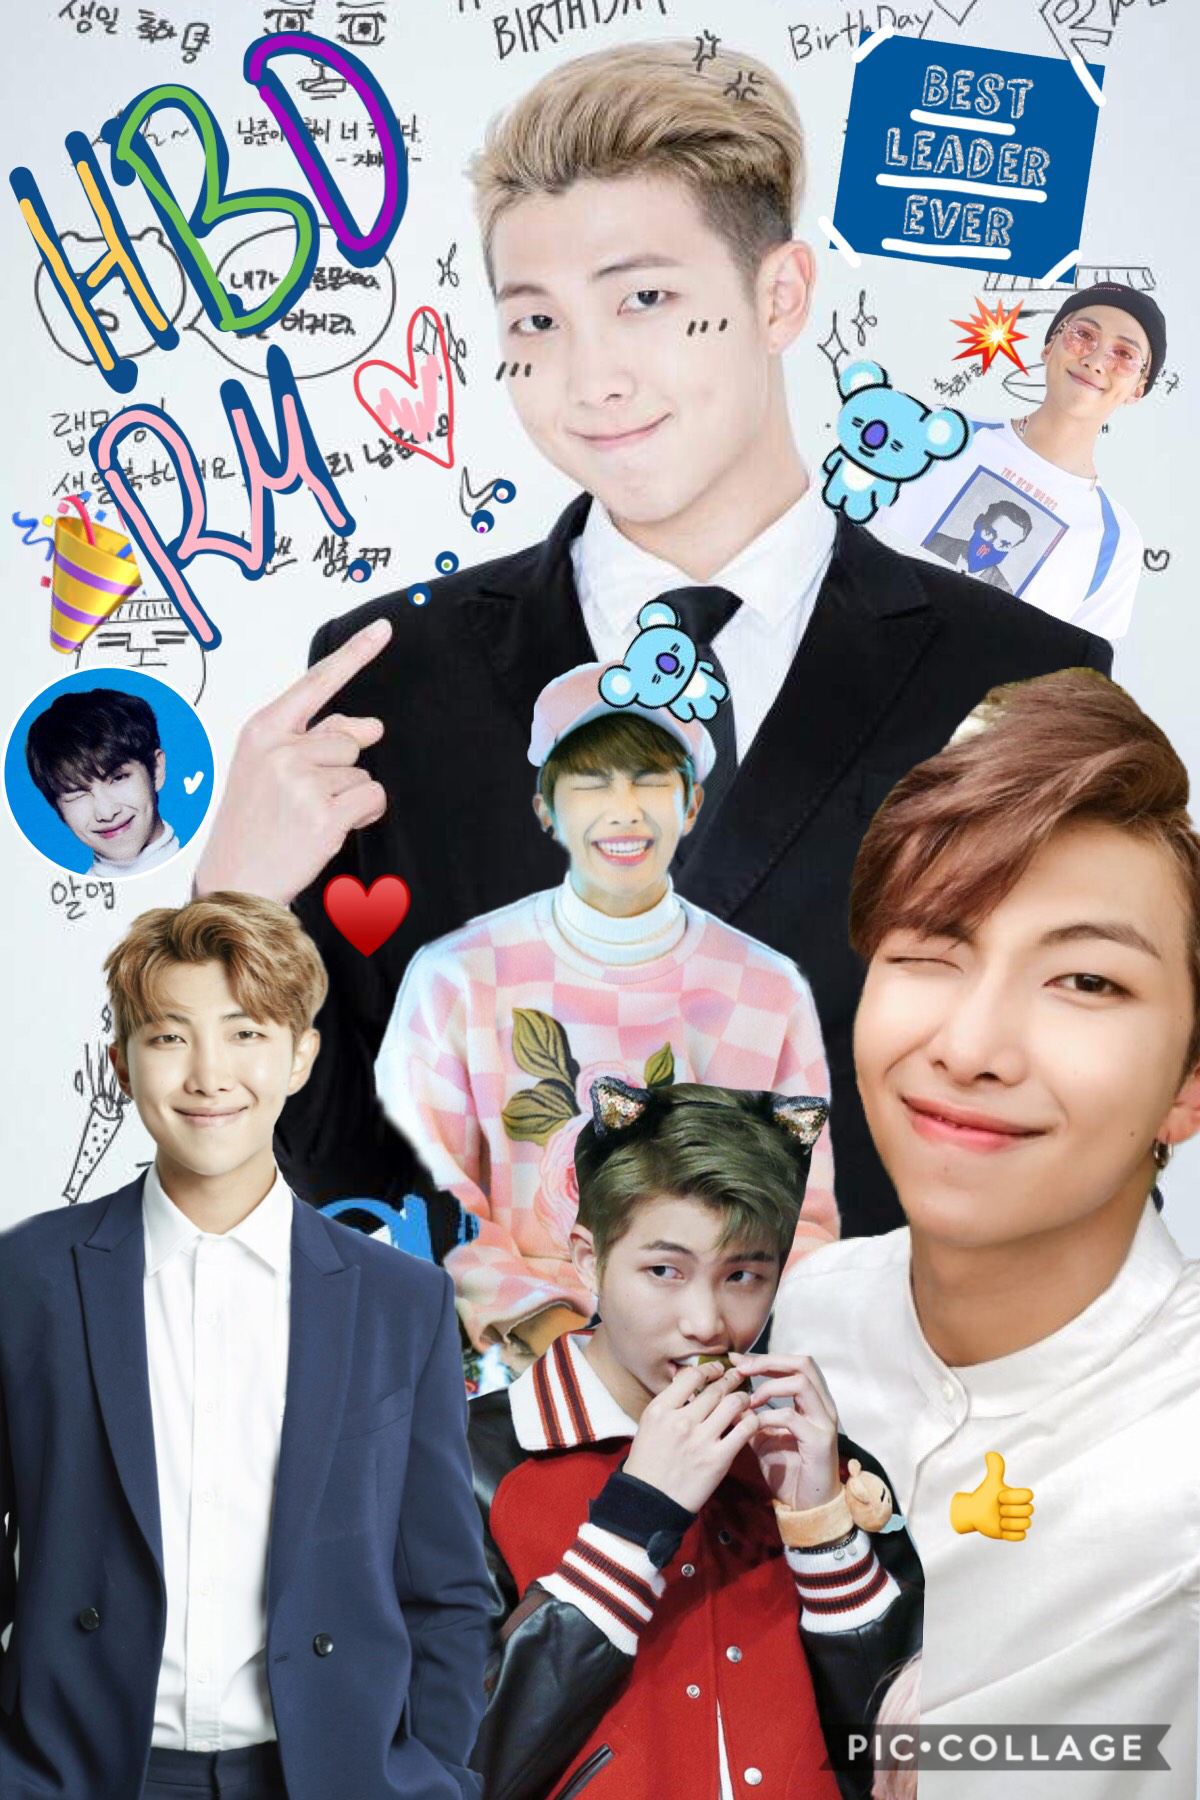 Happy birthday RM-BTS🎉🎉🎉❤️❤️❤️